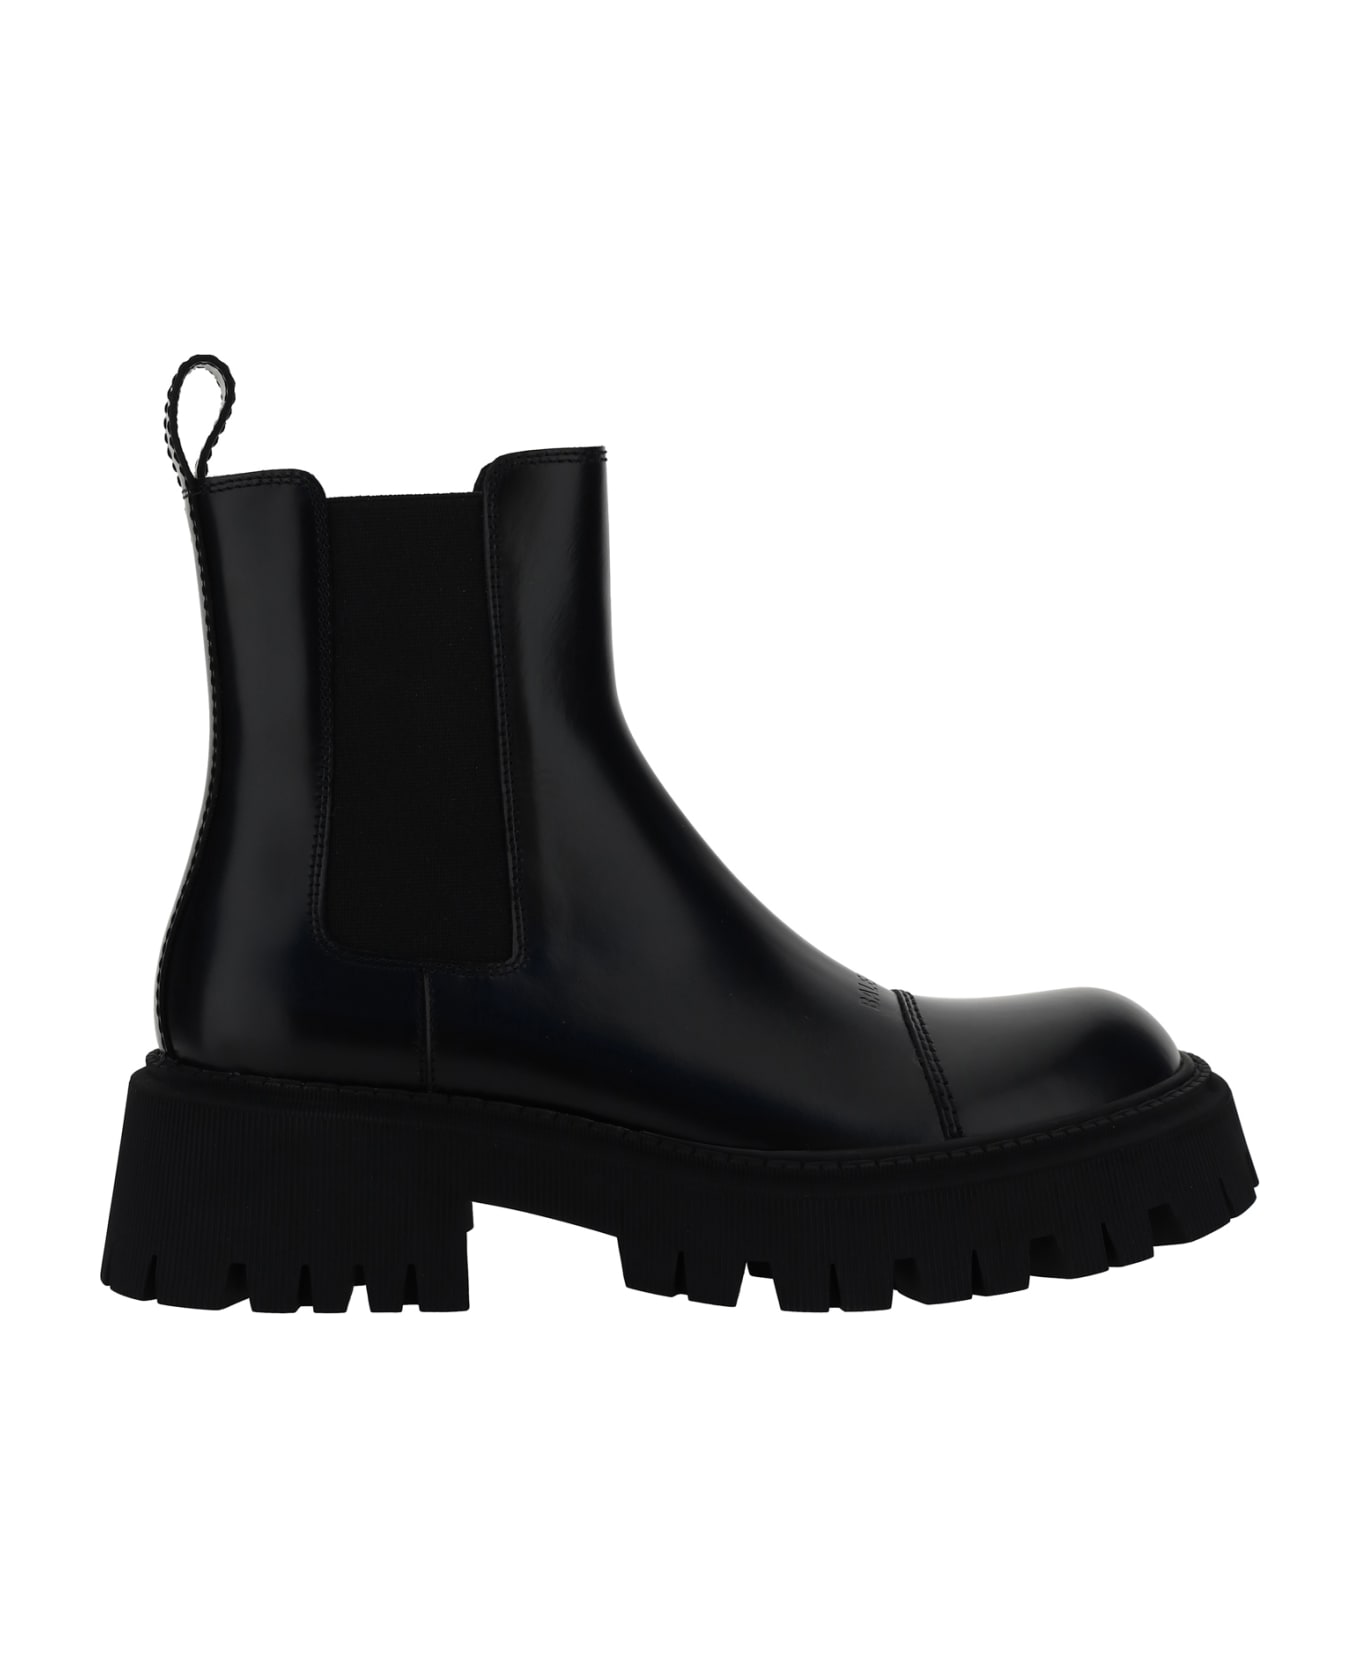 Balenciaga Tractor Boots - Black ブーツ